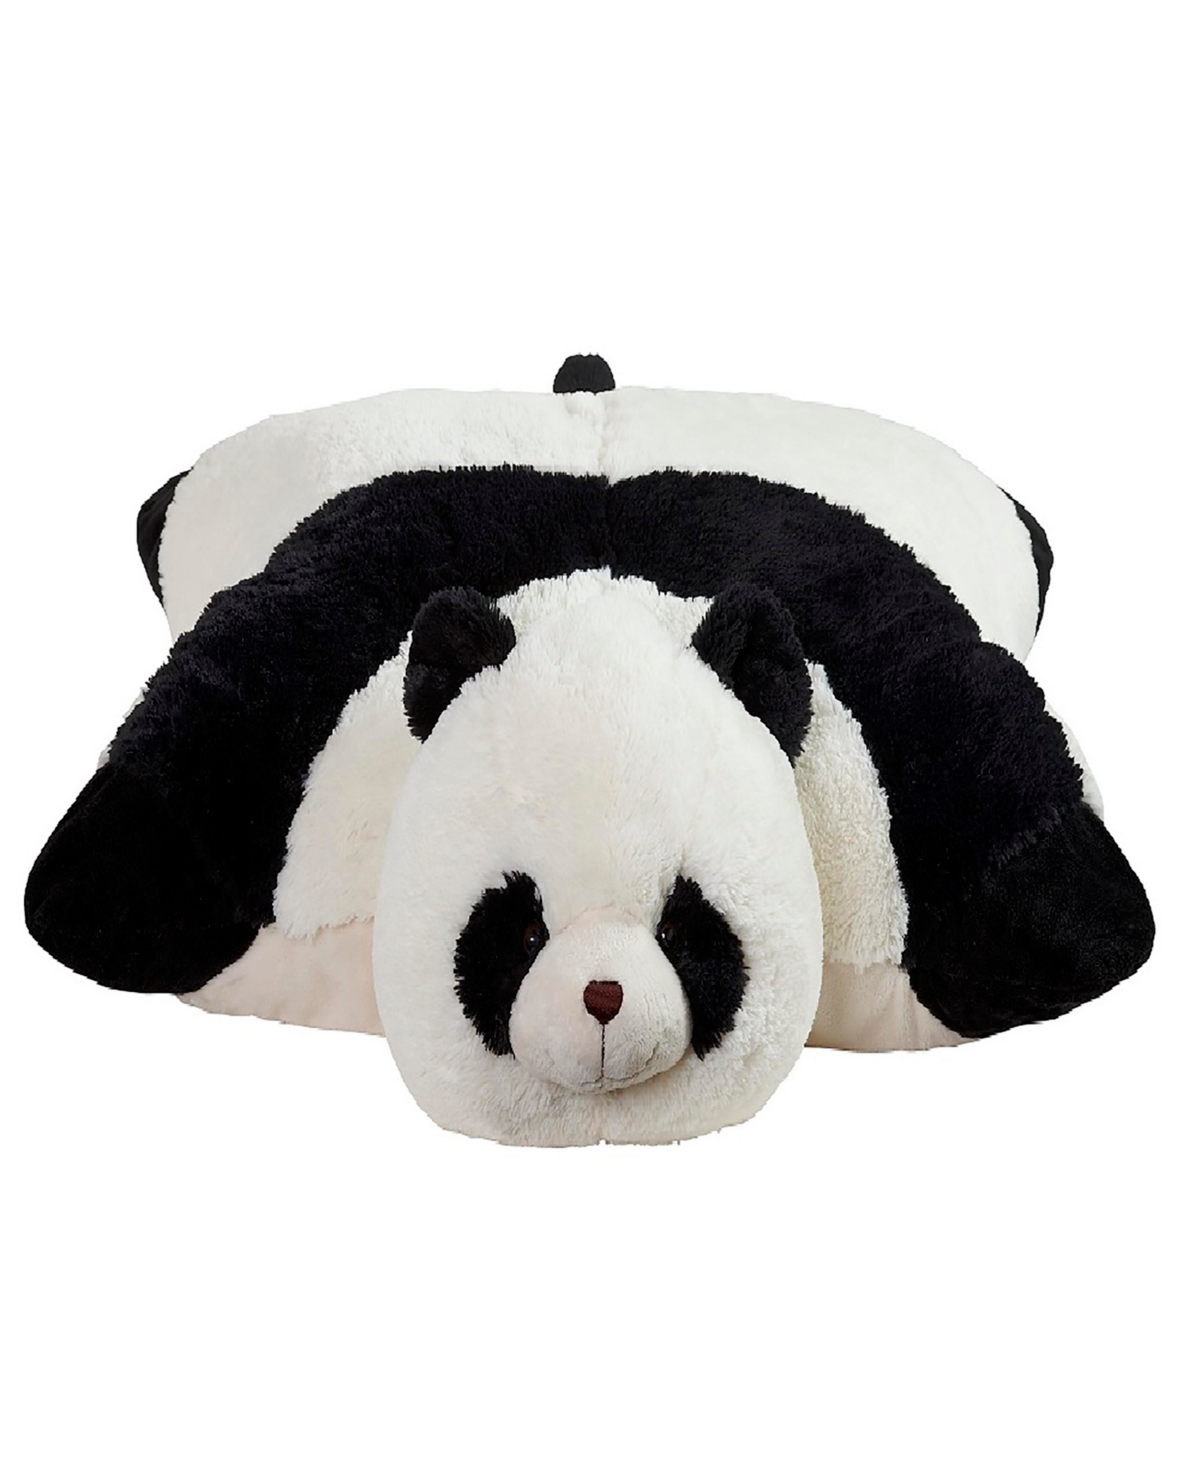 Pillow Pets Signature Comfy Panda Jumboz Stuffed Animal Plush Toy In Multi